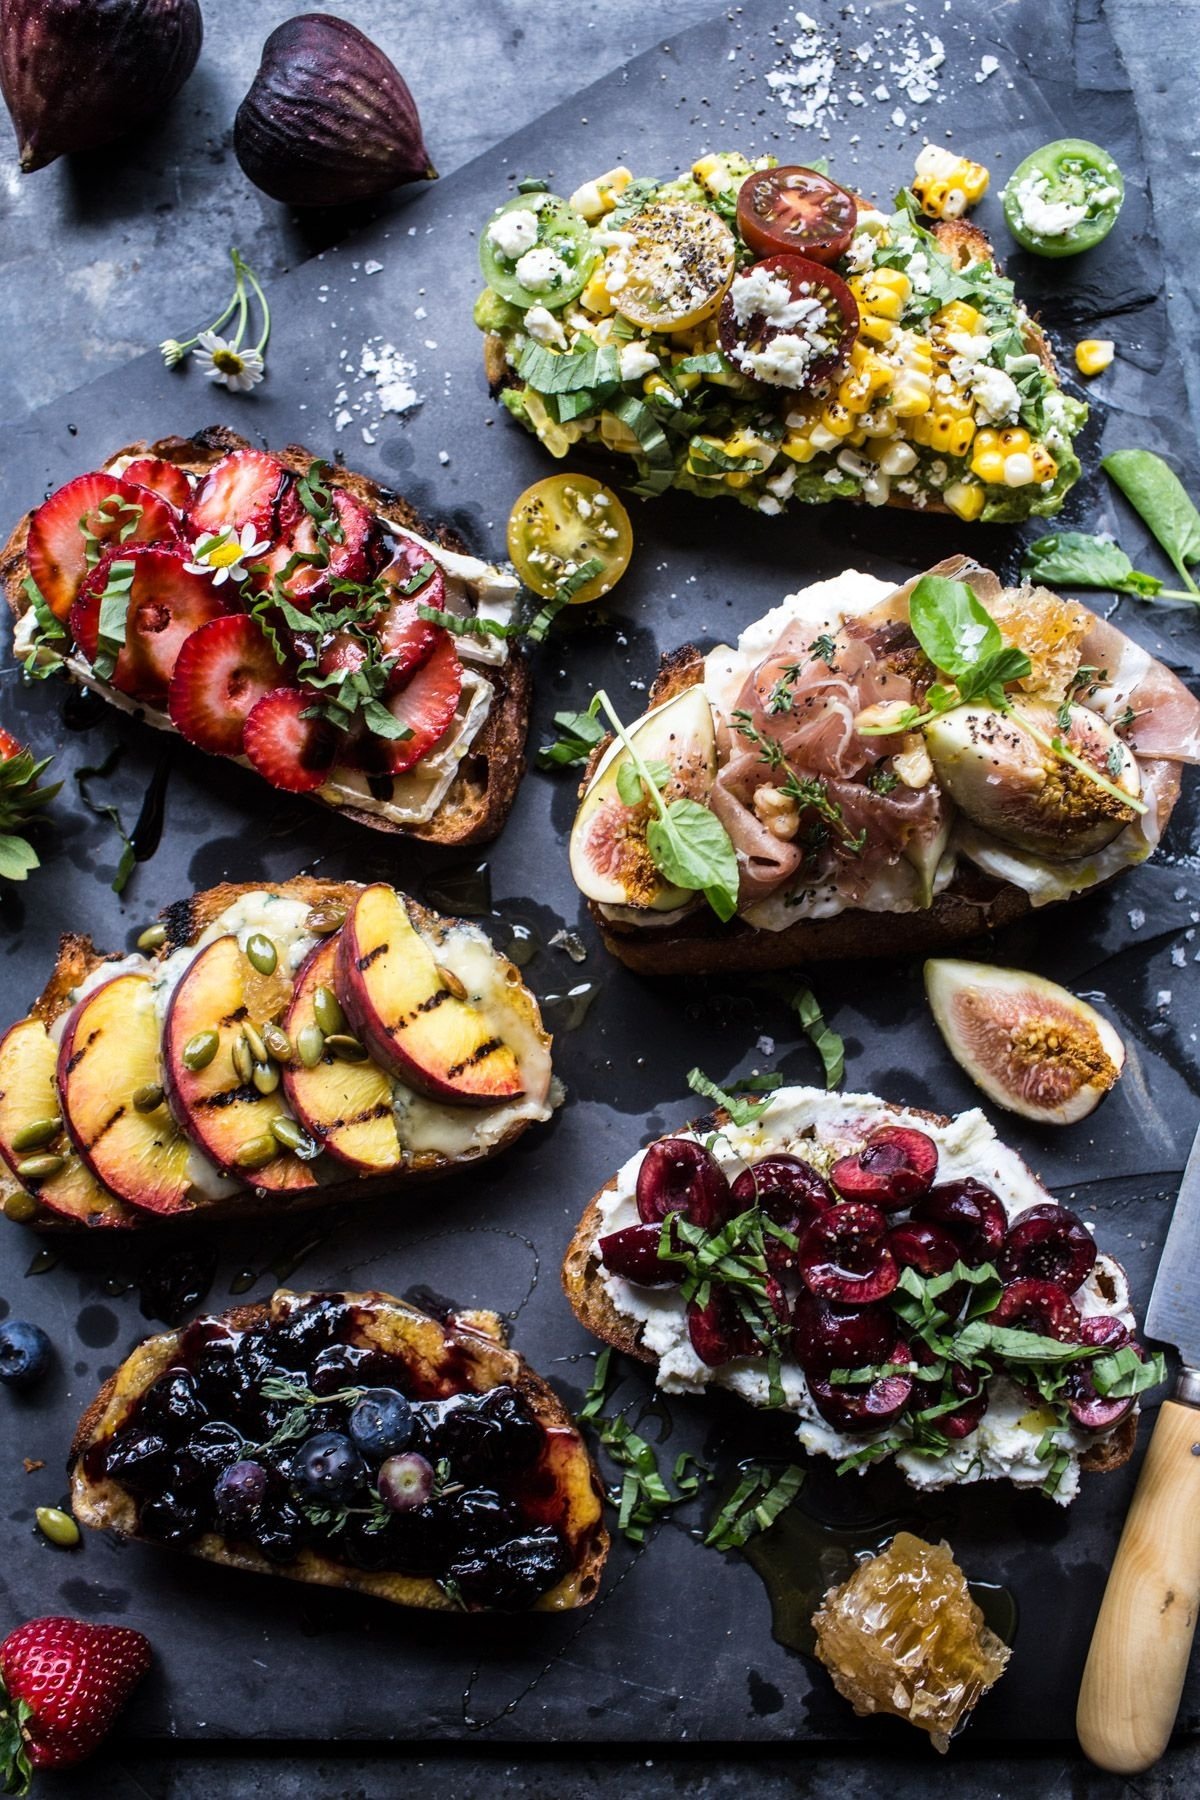 10 Wonderful Vegetarian Dinner Party Menu Ideas summer crostini 6 ways summer food and food and drink 2022